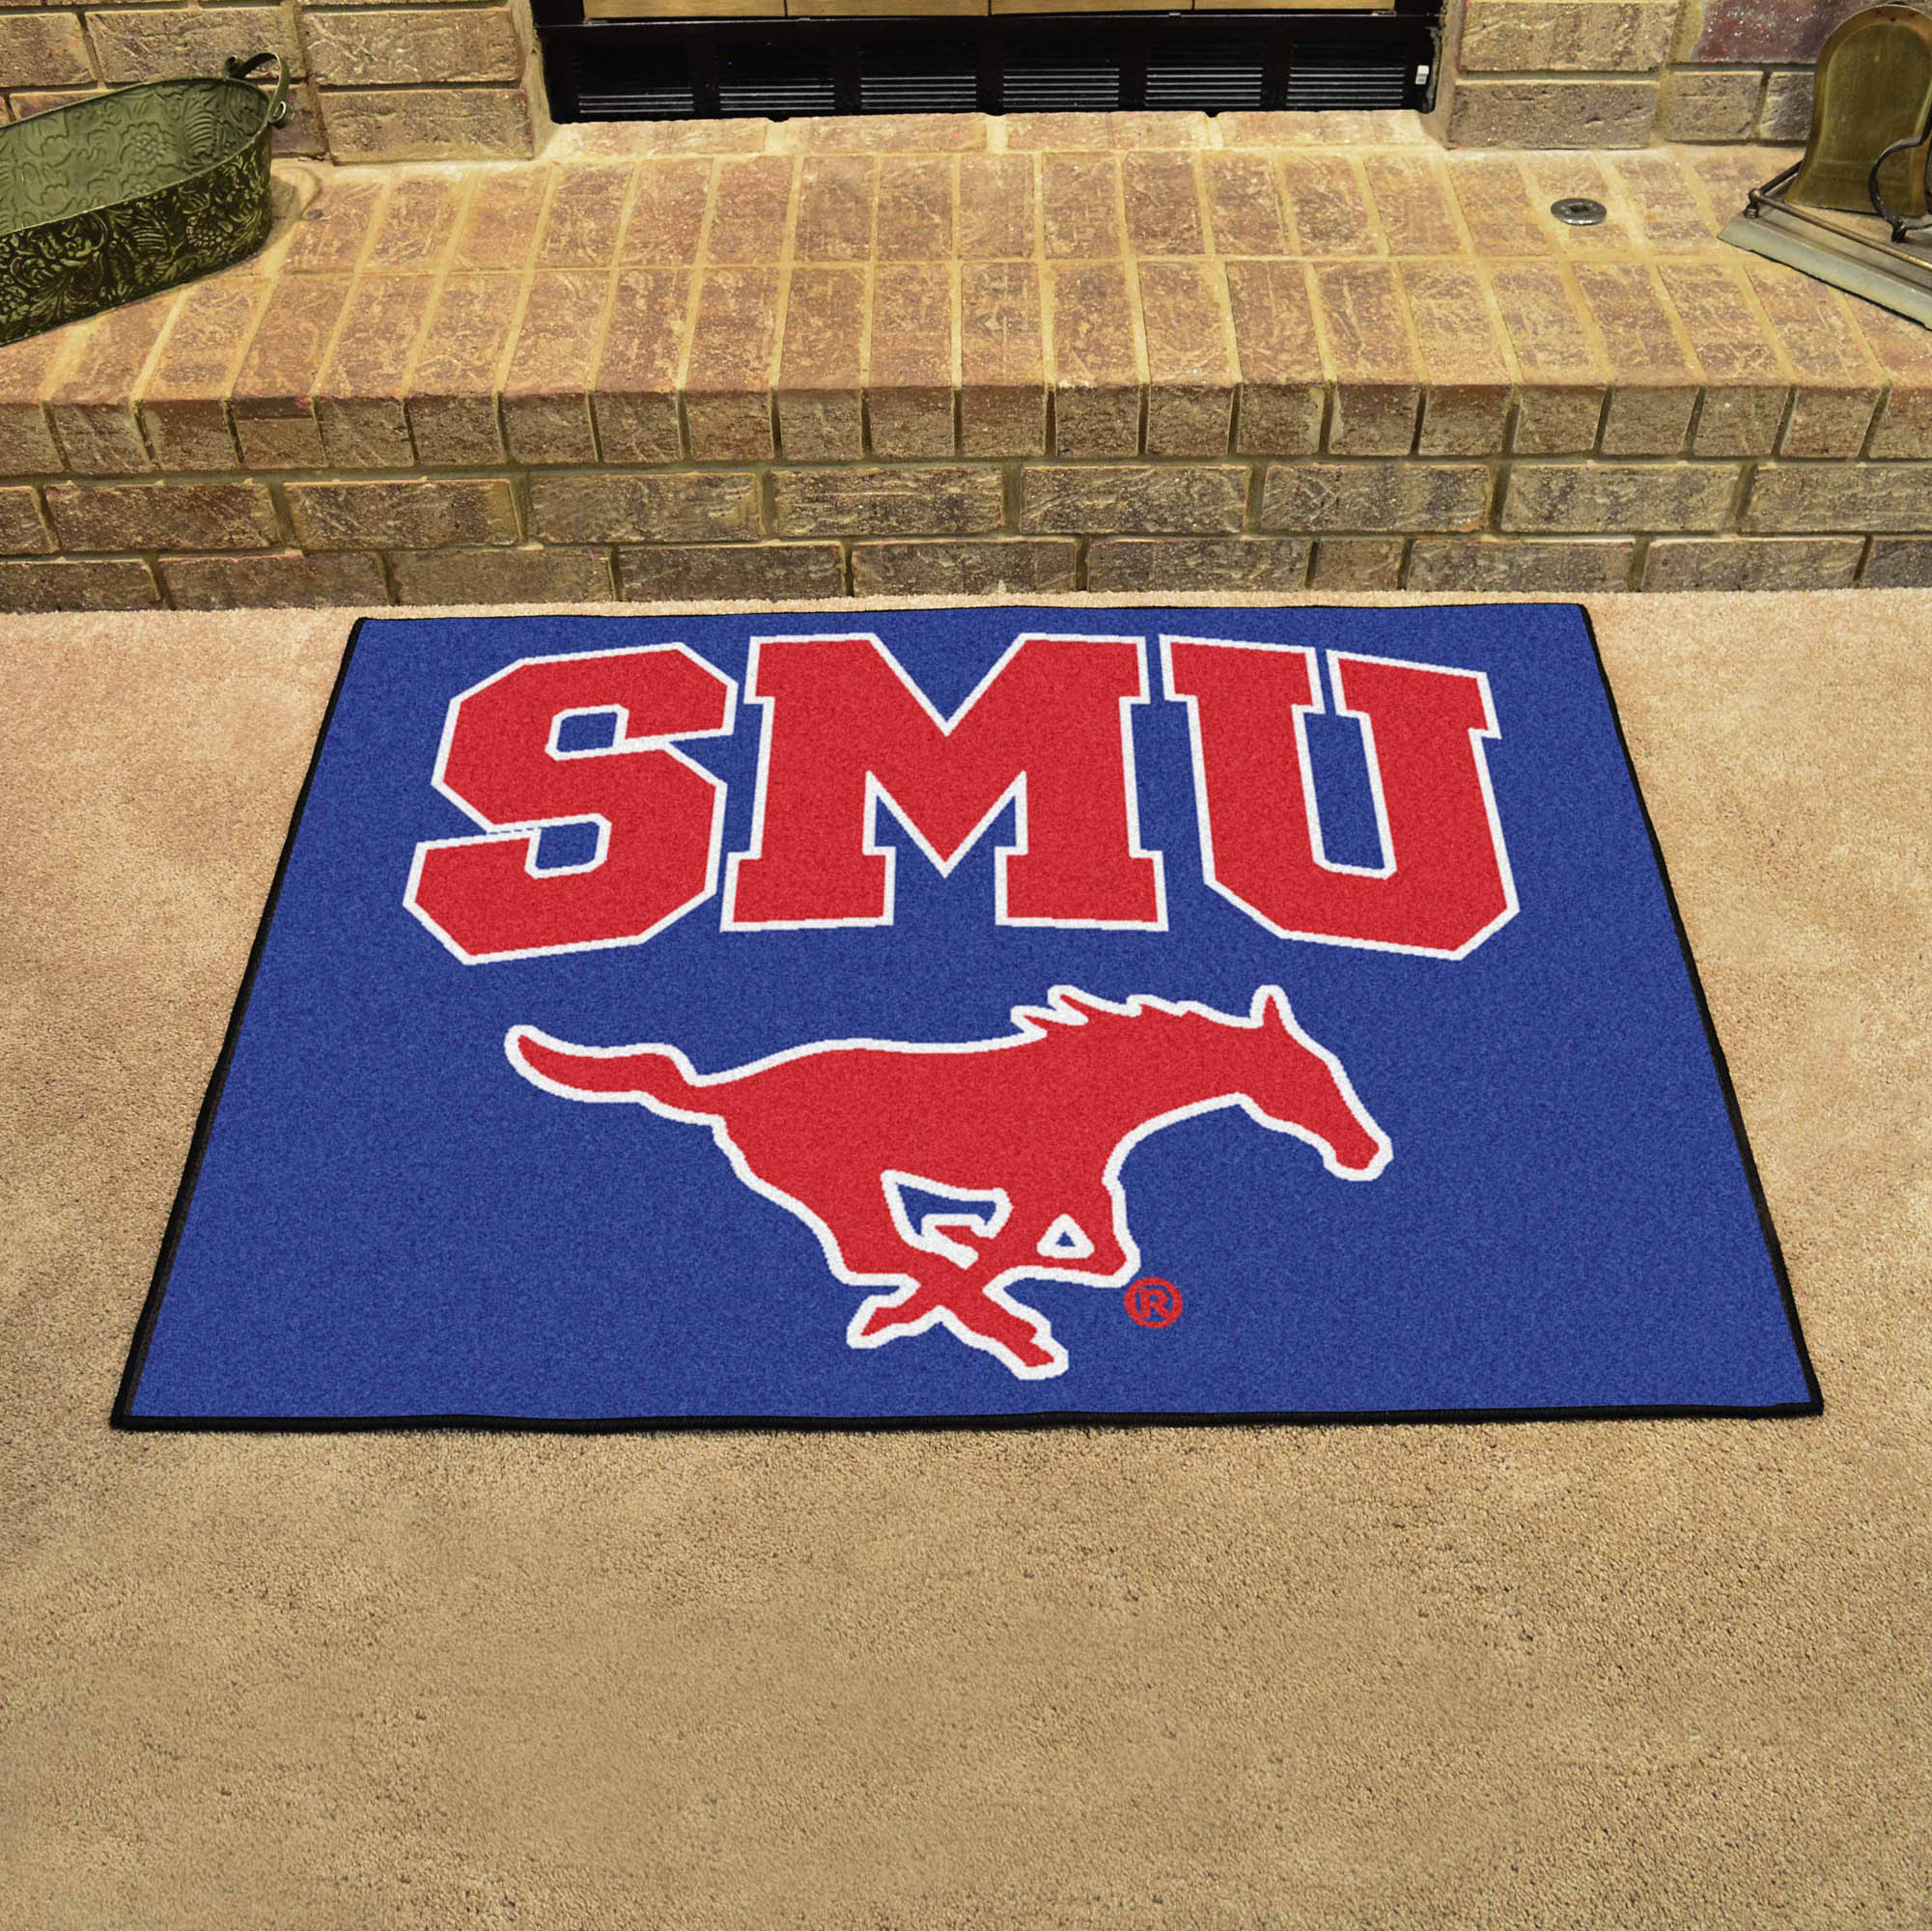 Southern Methodist University All Star  Doormat